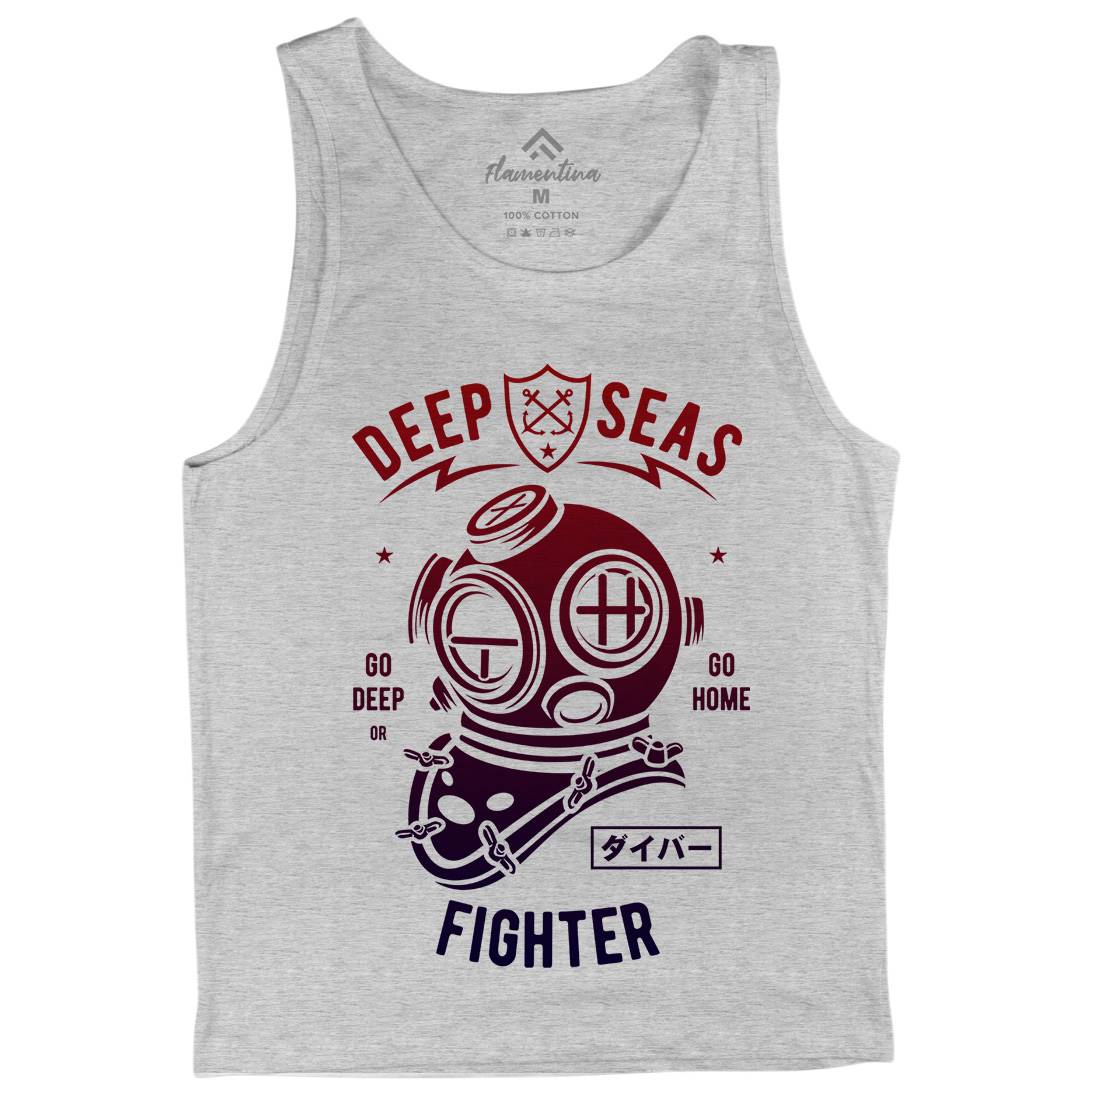 Deep Seas Fighter Mens Tank Top Vest Navy A223